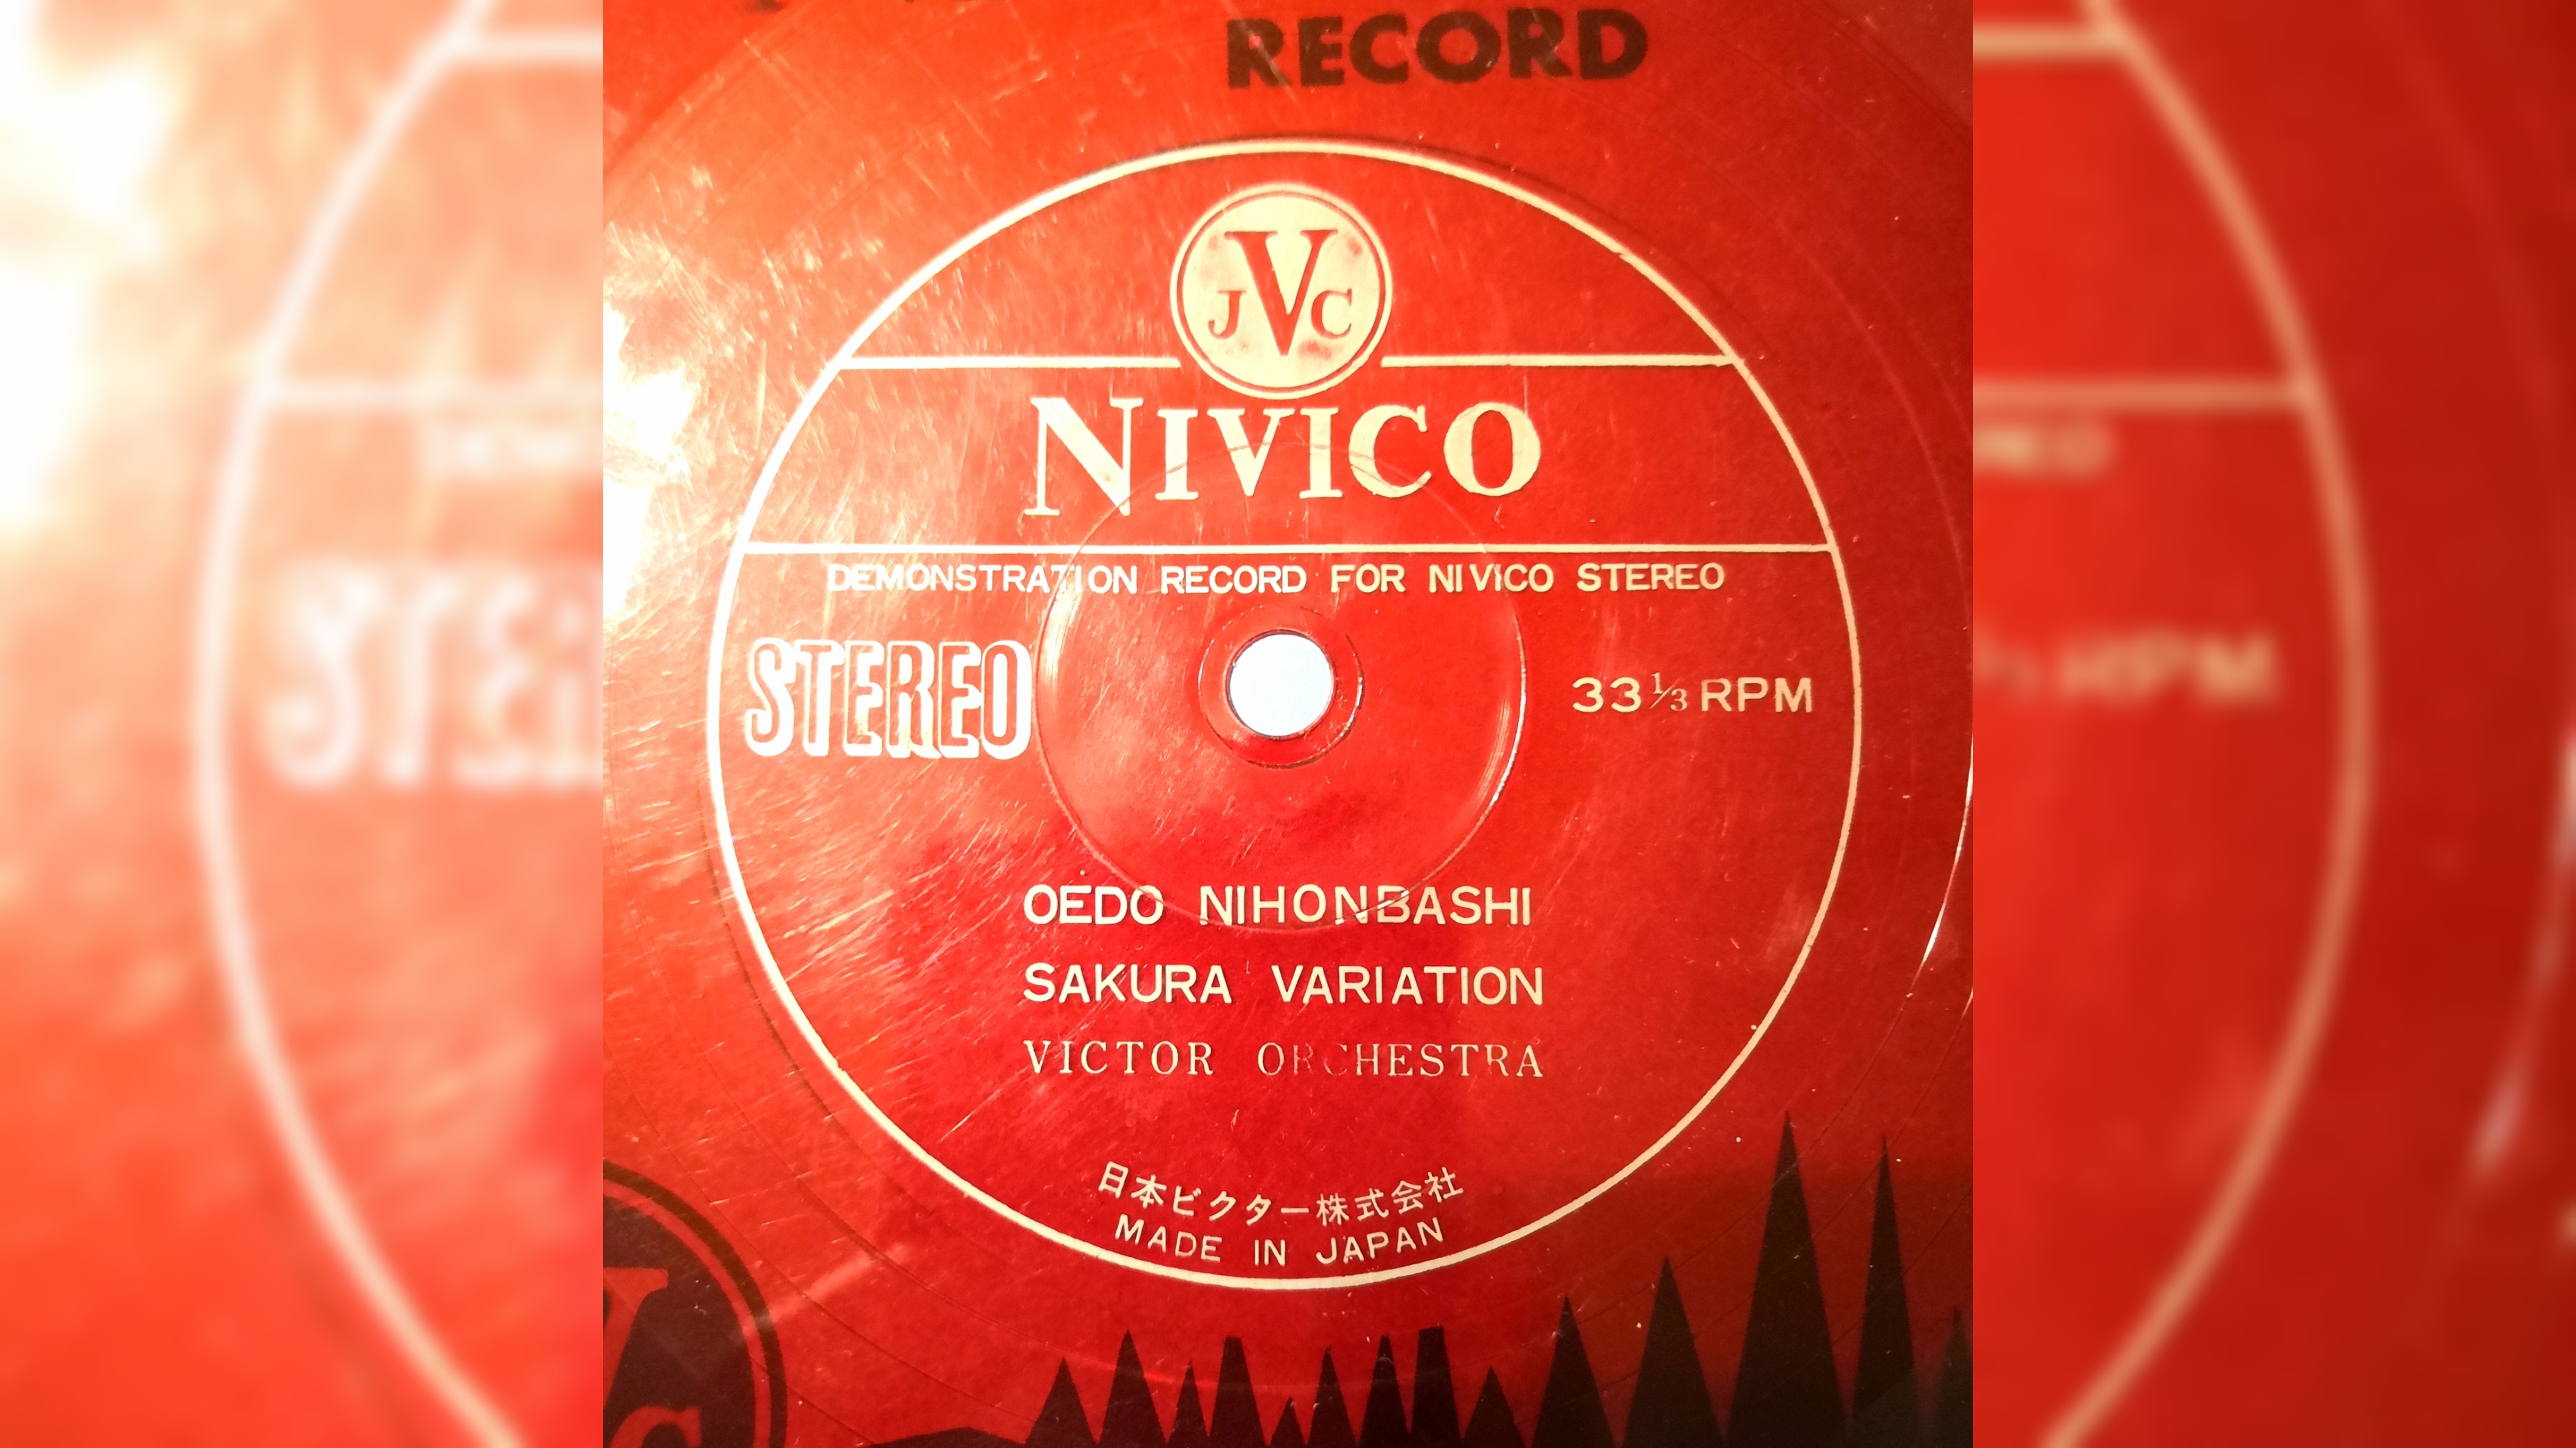 OEDO NIHONBASHI
«Cakura Variation»
VICTOR ORCHESTRA
Made in Japan 
Nivico Record